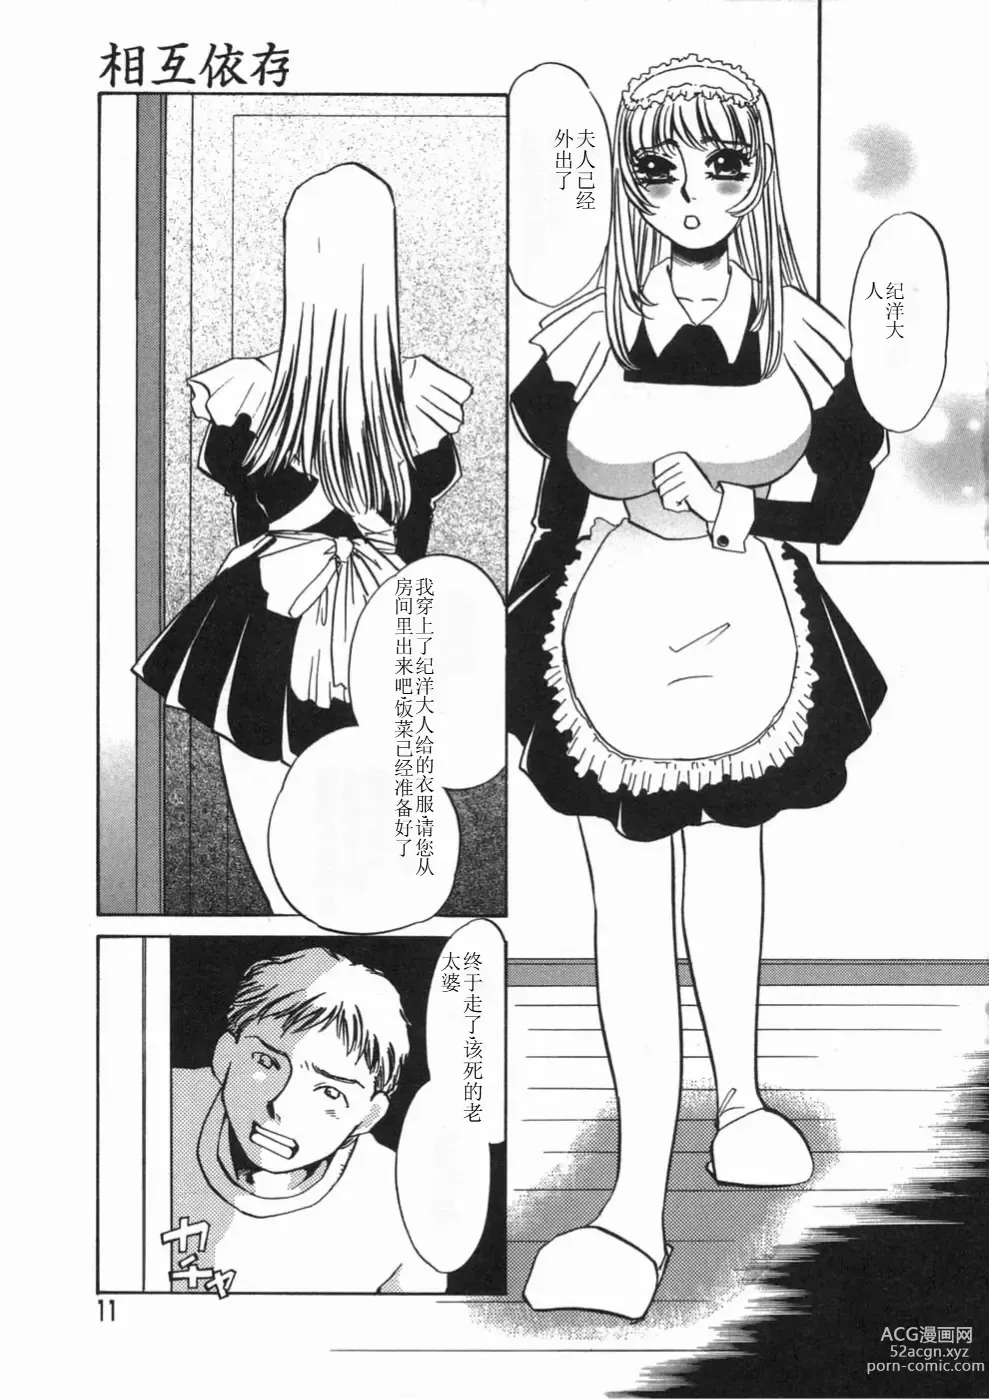 Page 11 of manga Ruirui